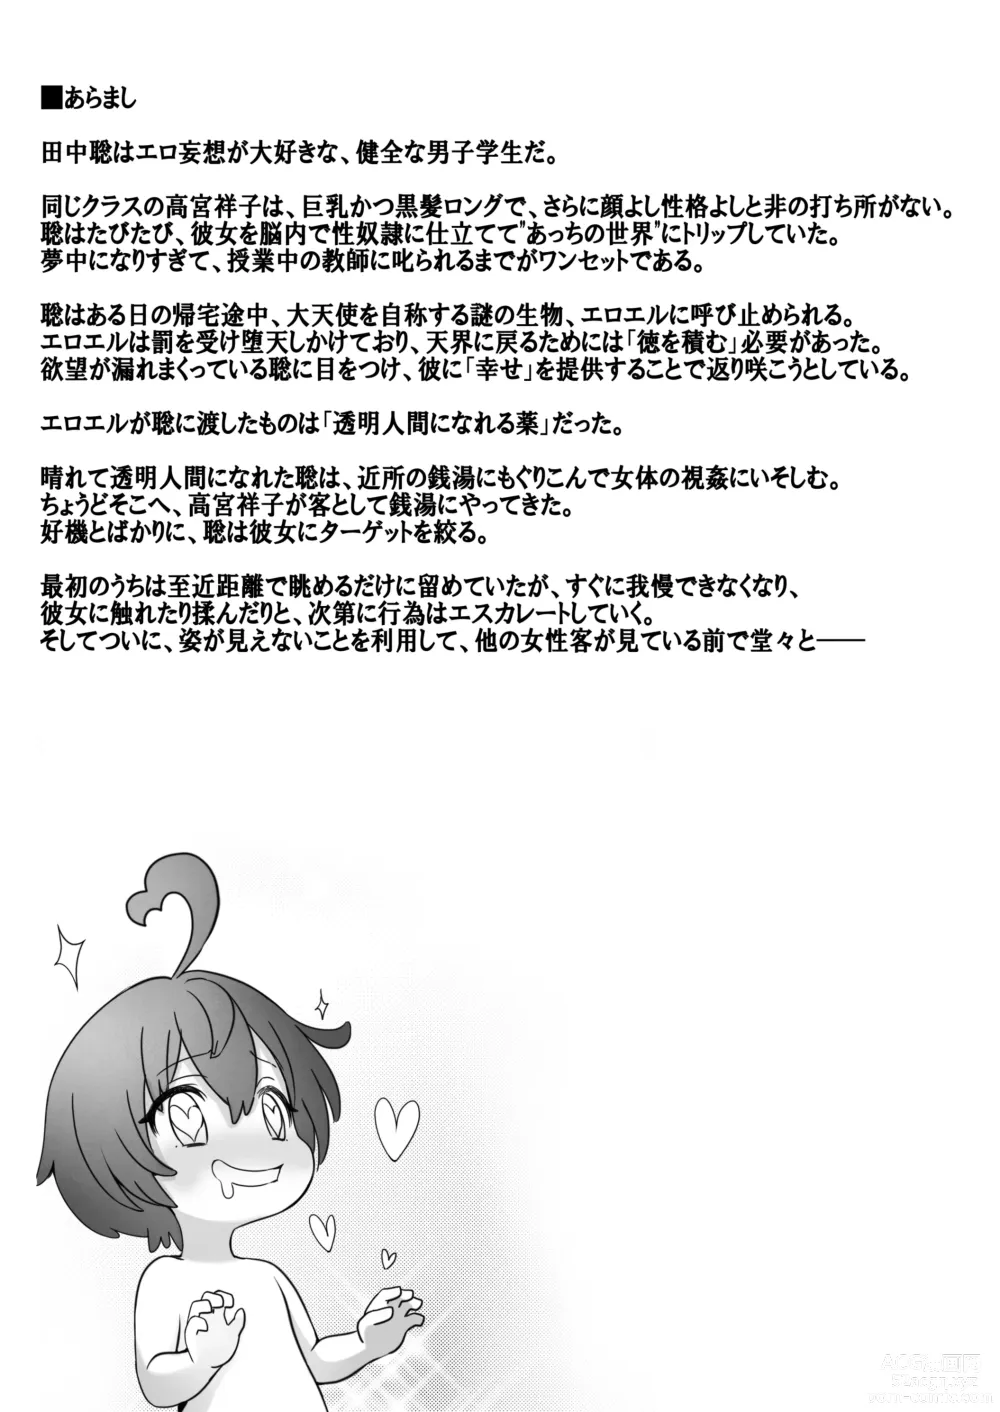 Page 2 of doujinshi Toumei Ningen  ni Natta Ore, Onnaburo de Gakuen no  Kurokami Idol o Yaritai Houdai